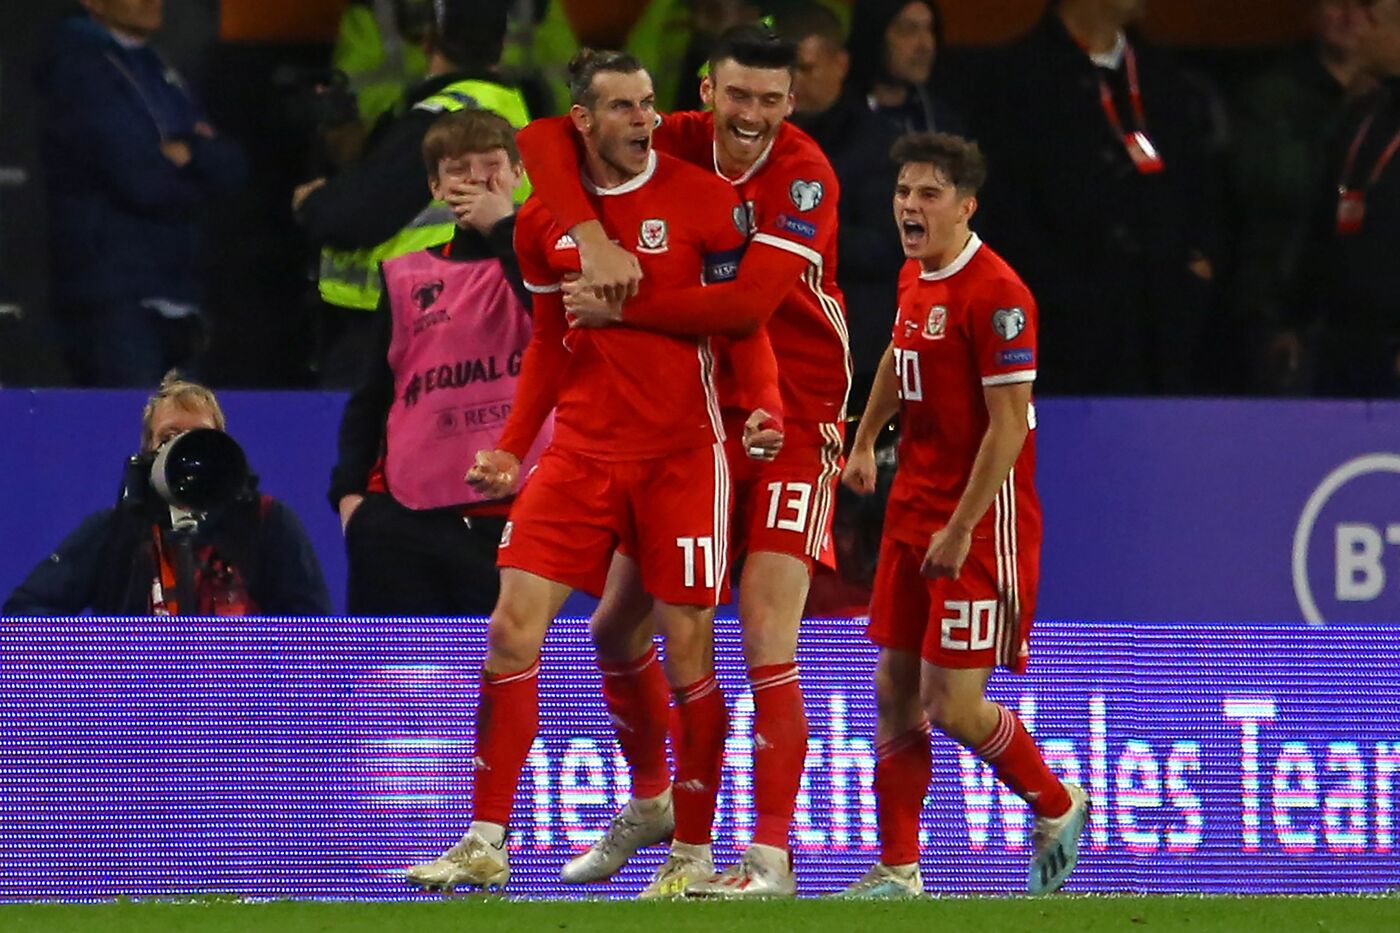 Galles-Ungheria pronostico 19 novembre Qualificazioni Europei